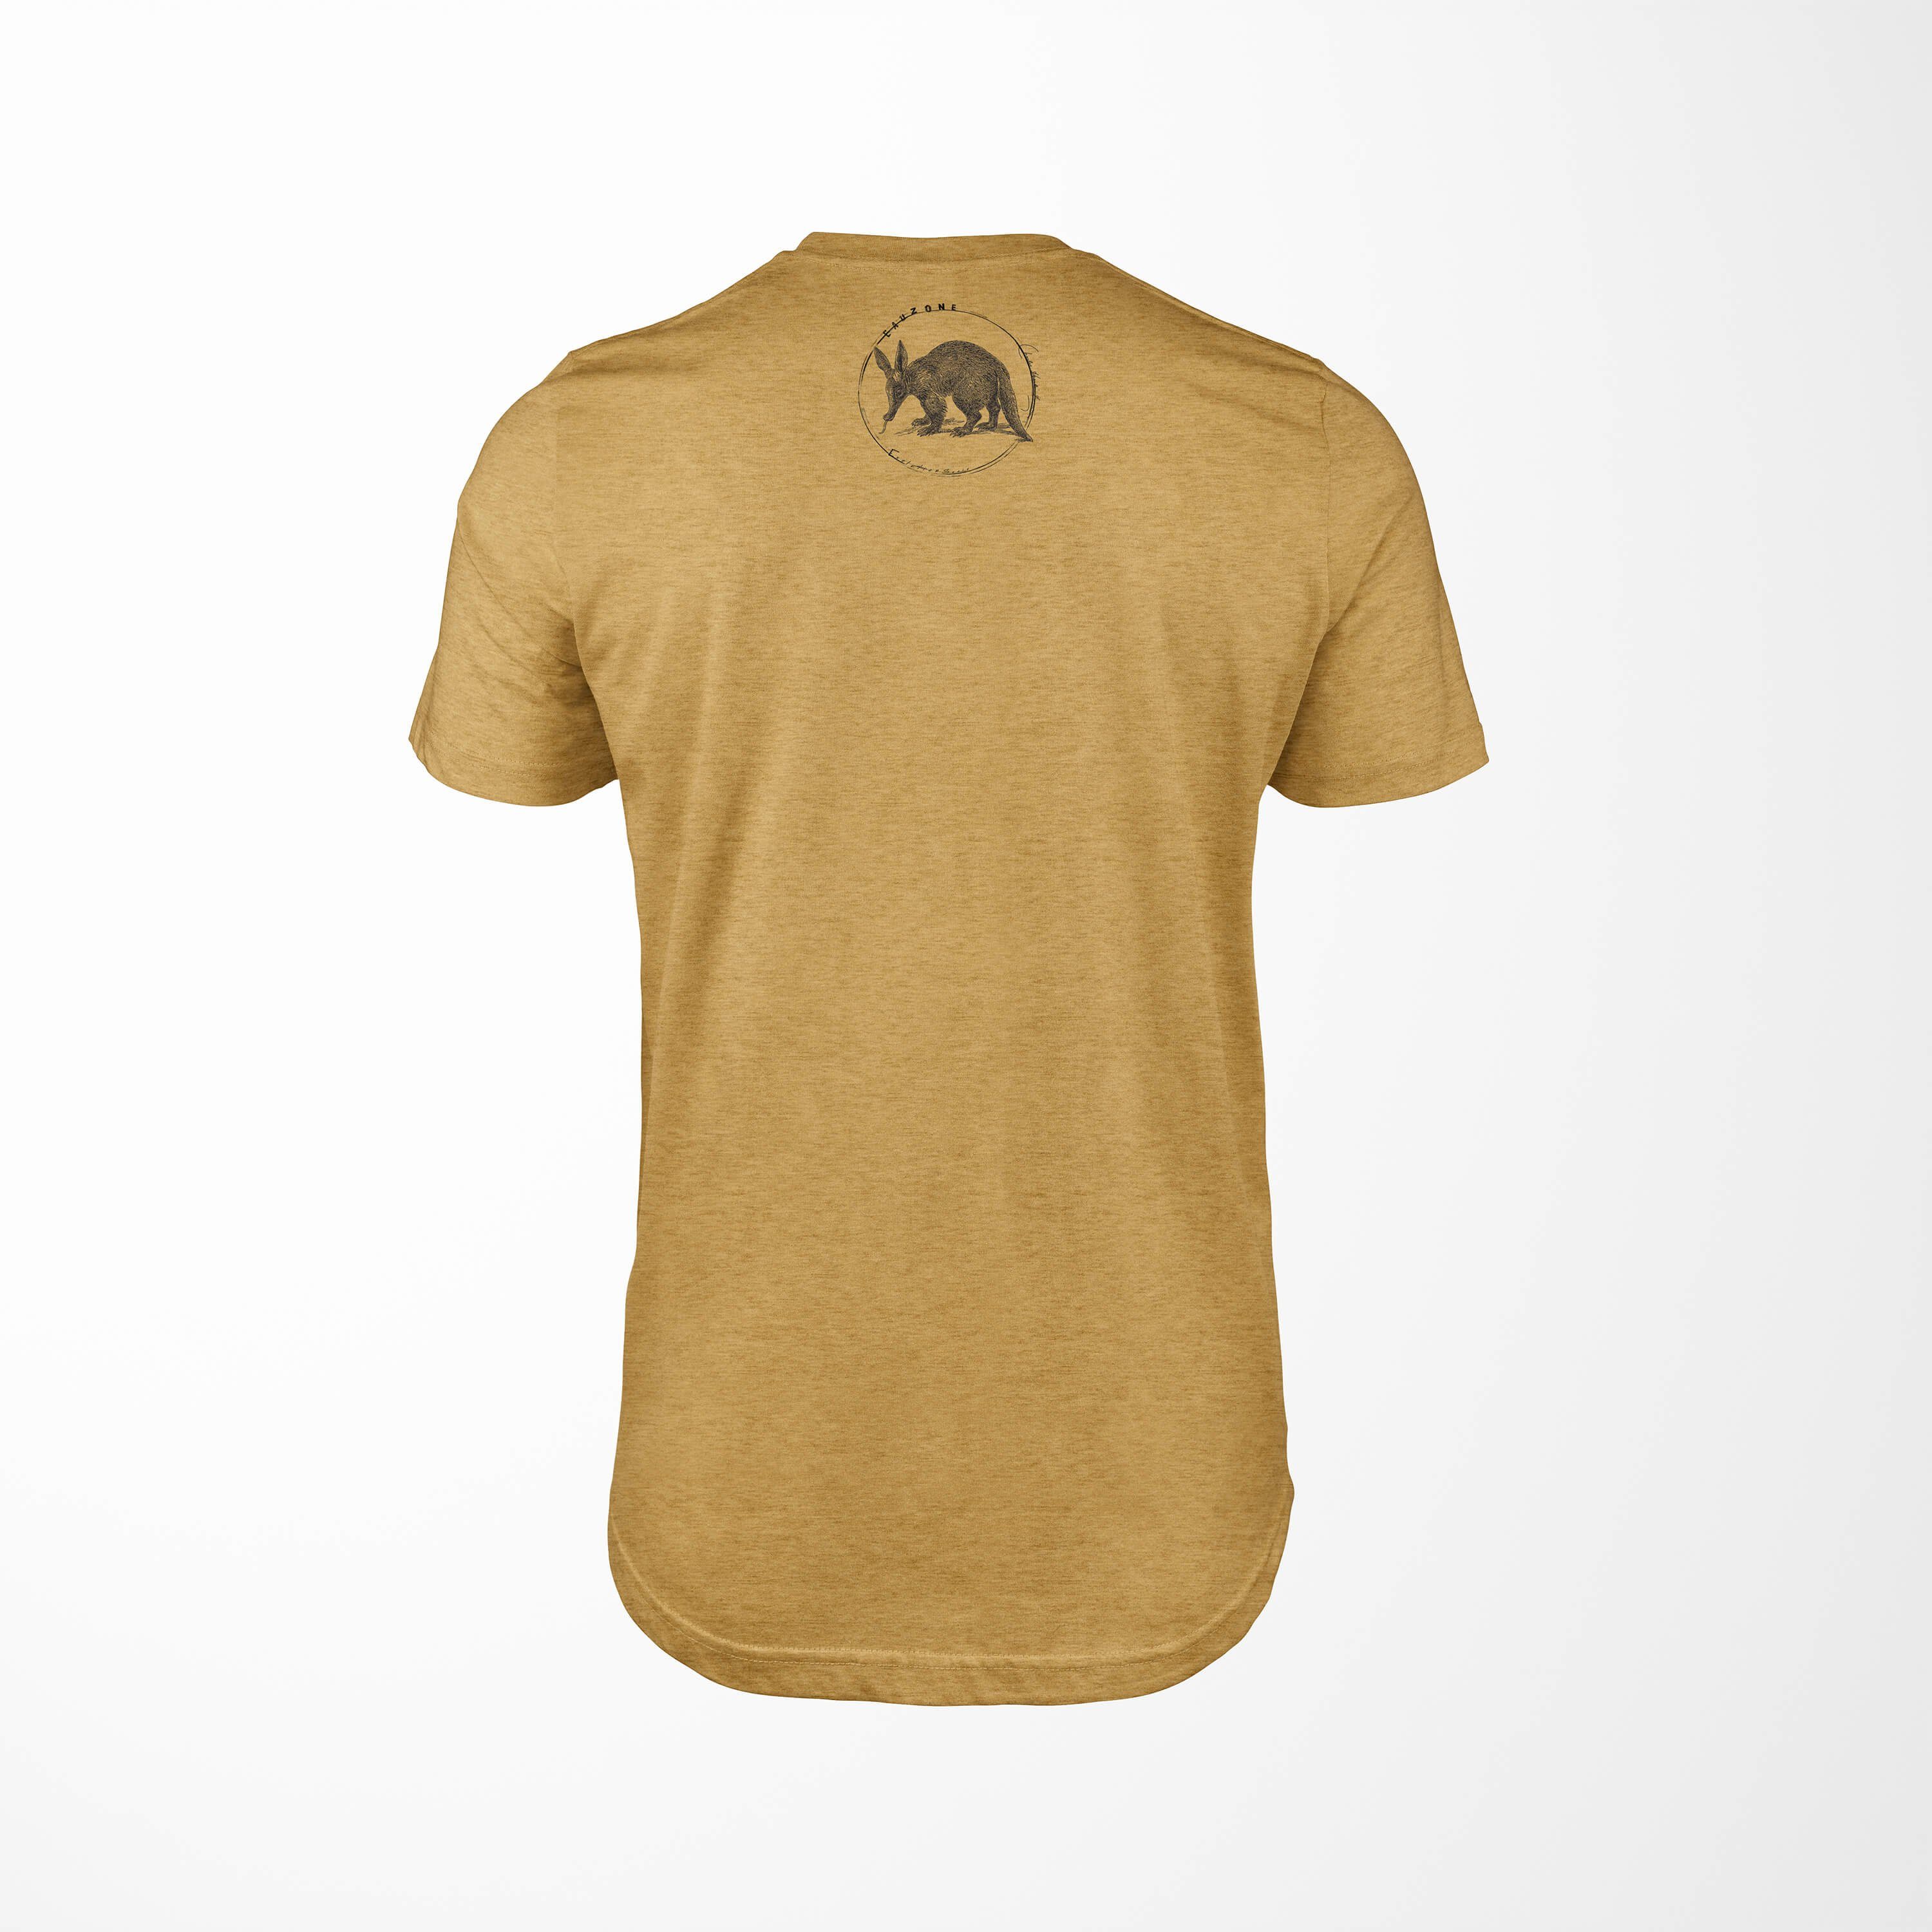 Gold T-Shirt Art Evolution Sinus Antique Herren T-Shirt Erdferkel